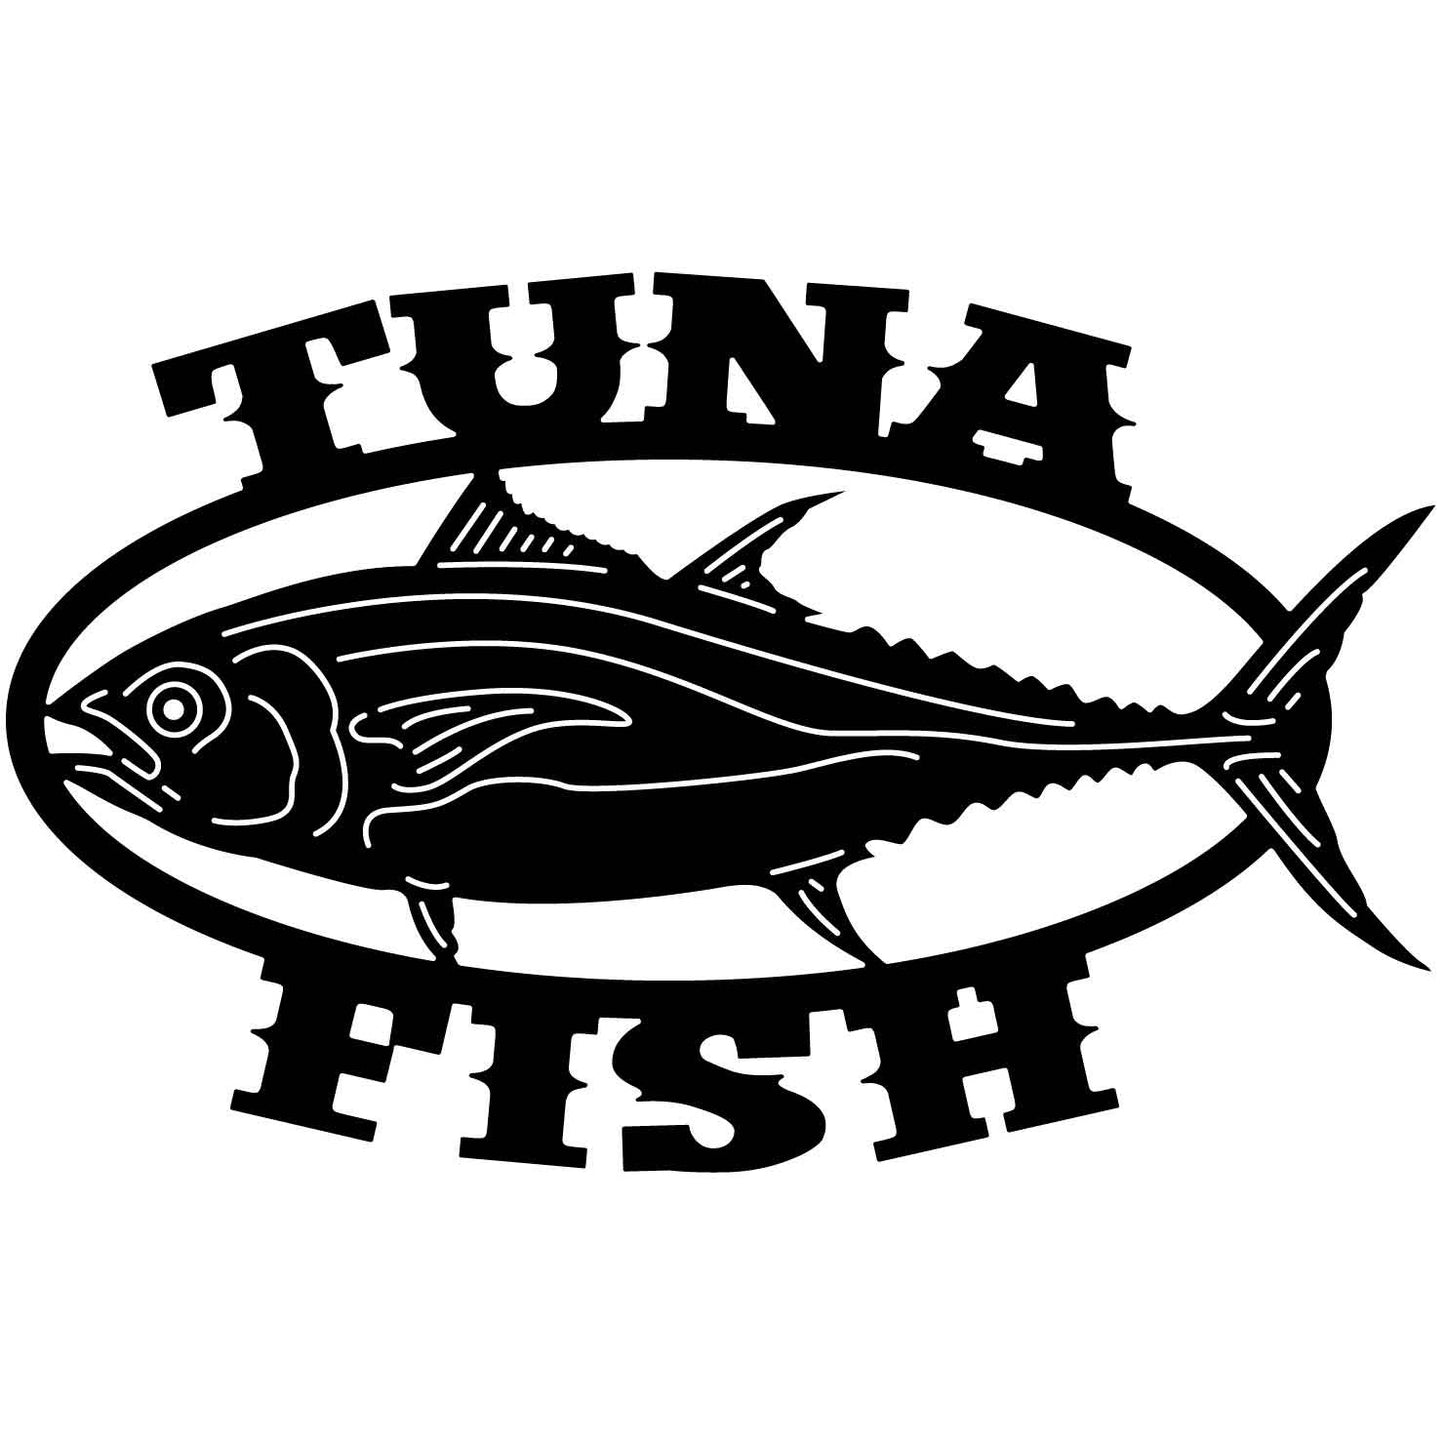 Fish Tuna Oval Sign